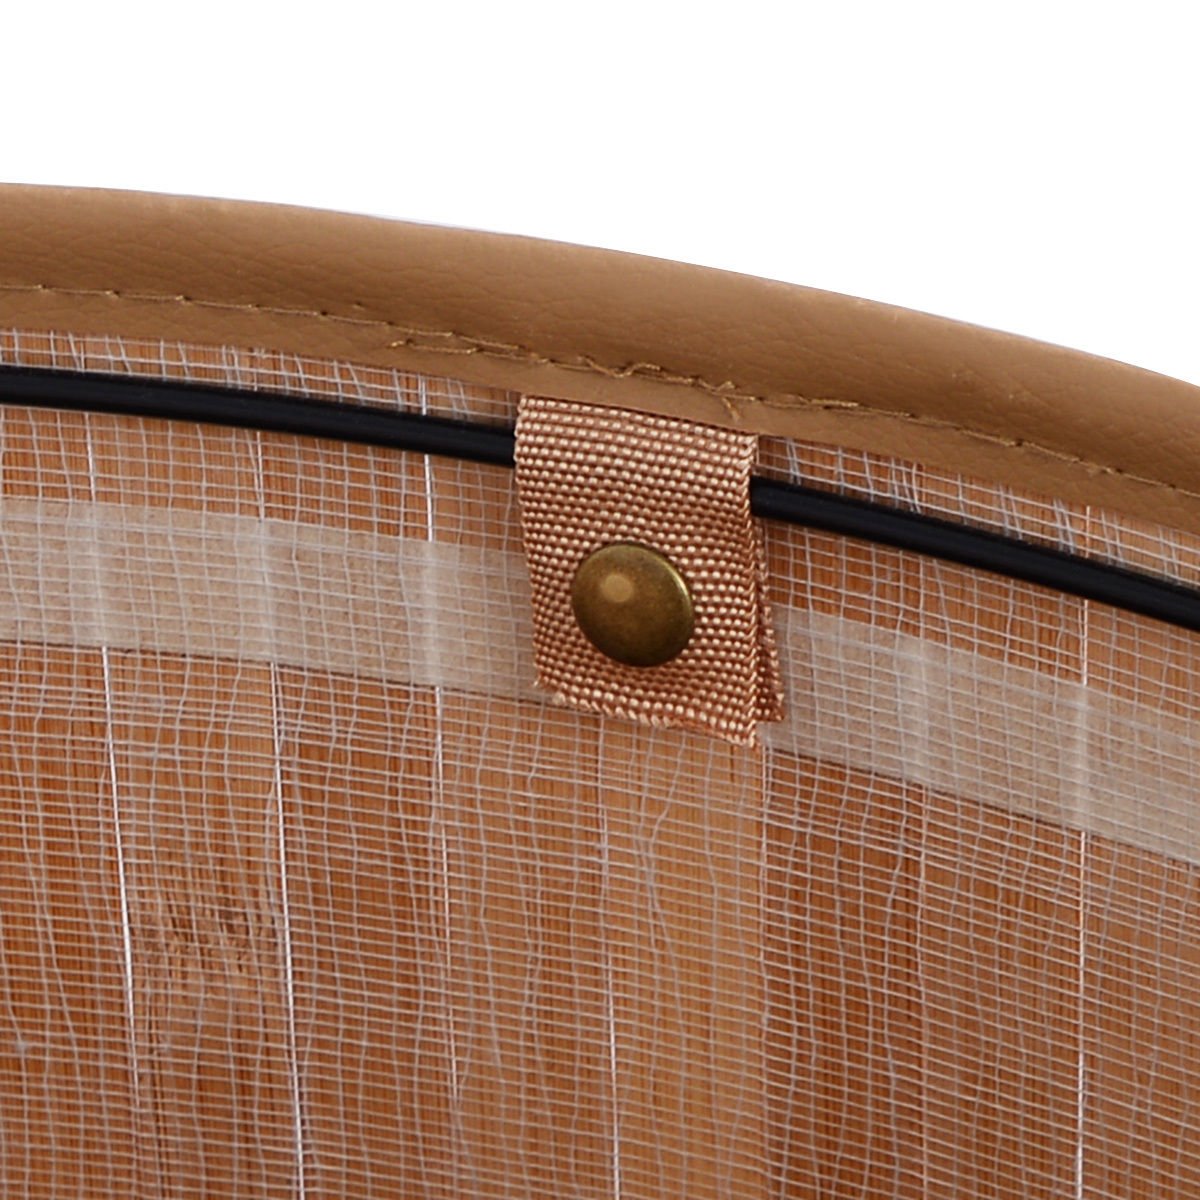 Corner Bamboo Hamper Laundry Basket, Natural - Gallery Canada